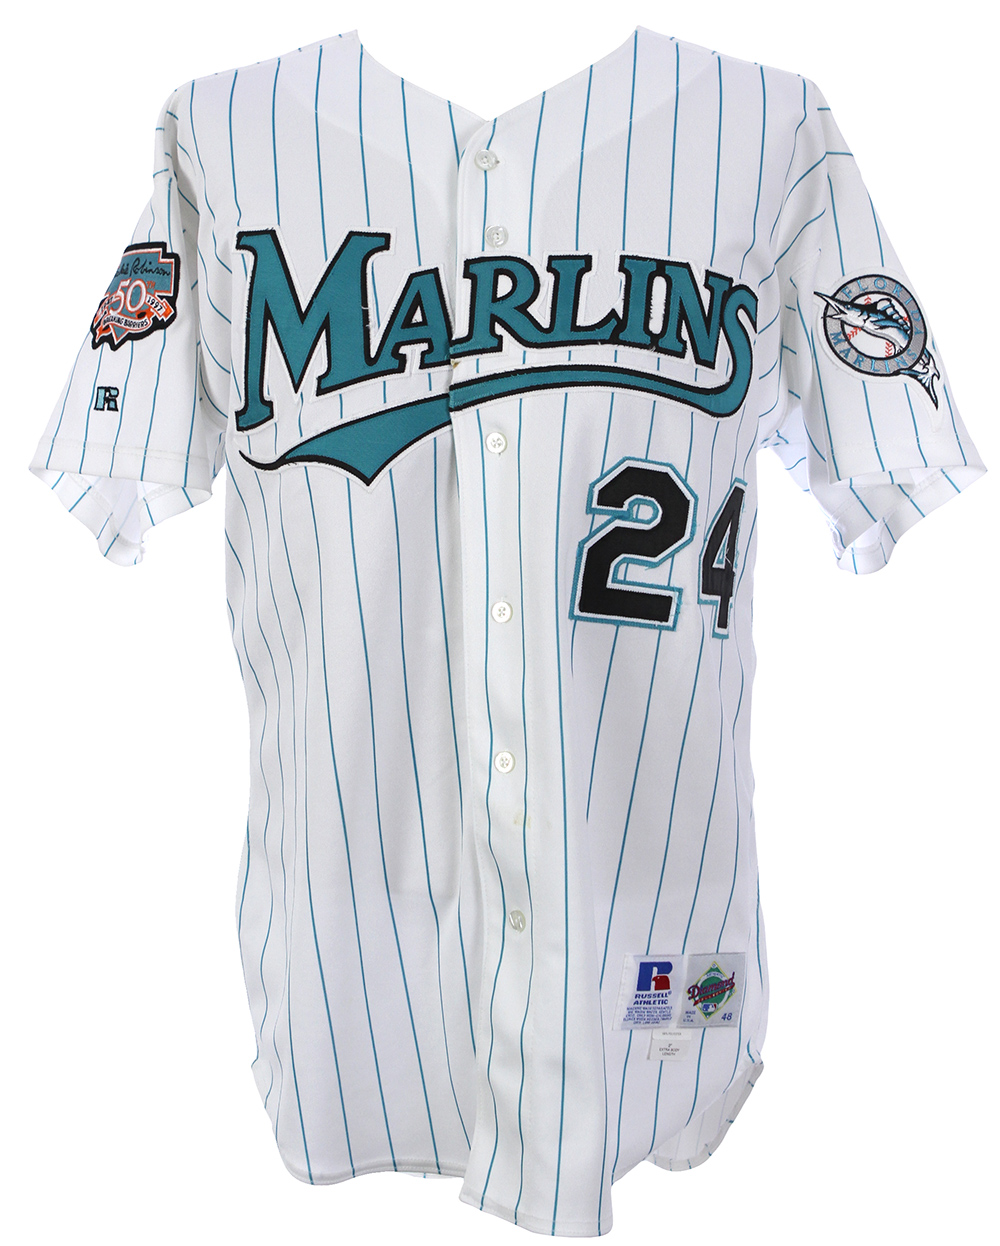 1997 marlins jersey